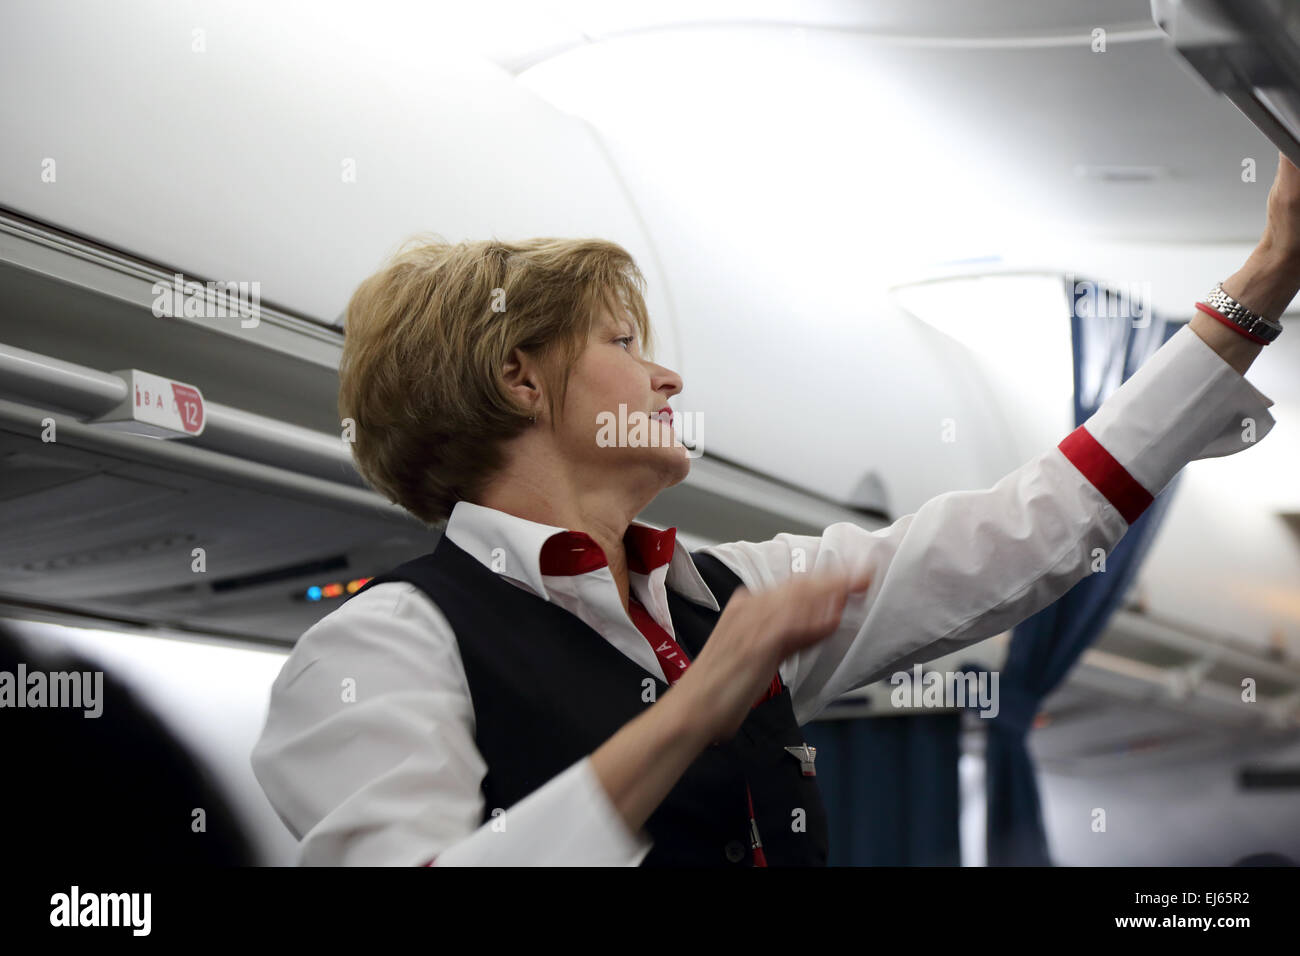 Female flight attendant closes overhead carry-on bins on airplane flight Stock Photo